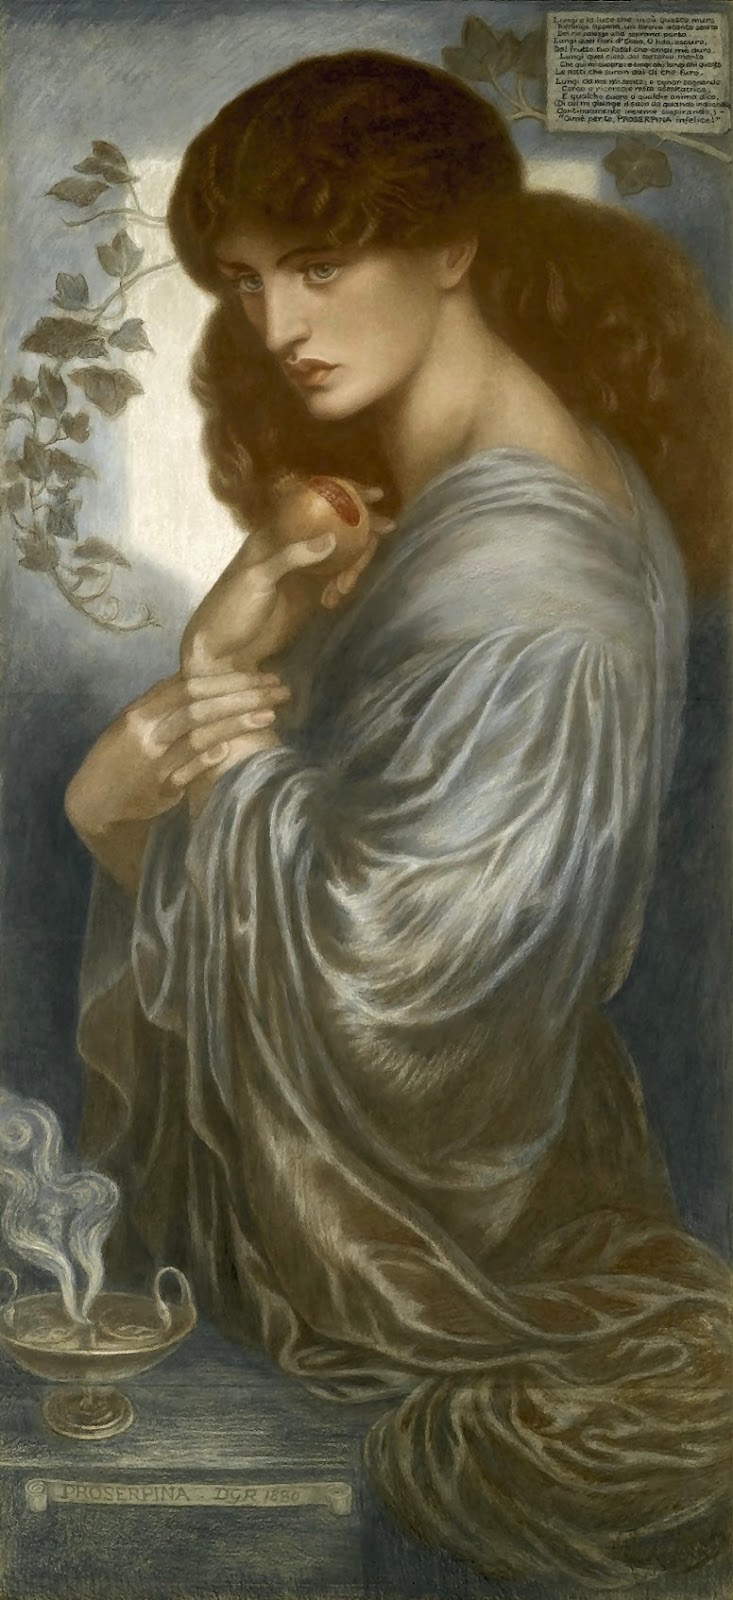 Dante+Gabriel+Rossetti-1828-1882 (132).jpg